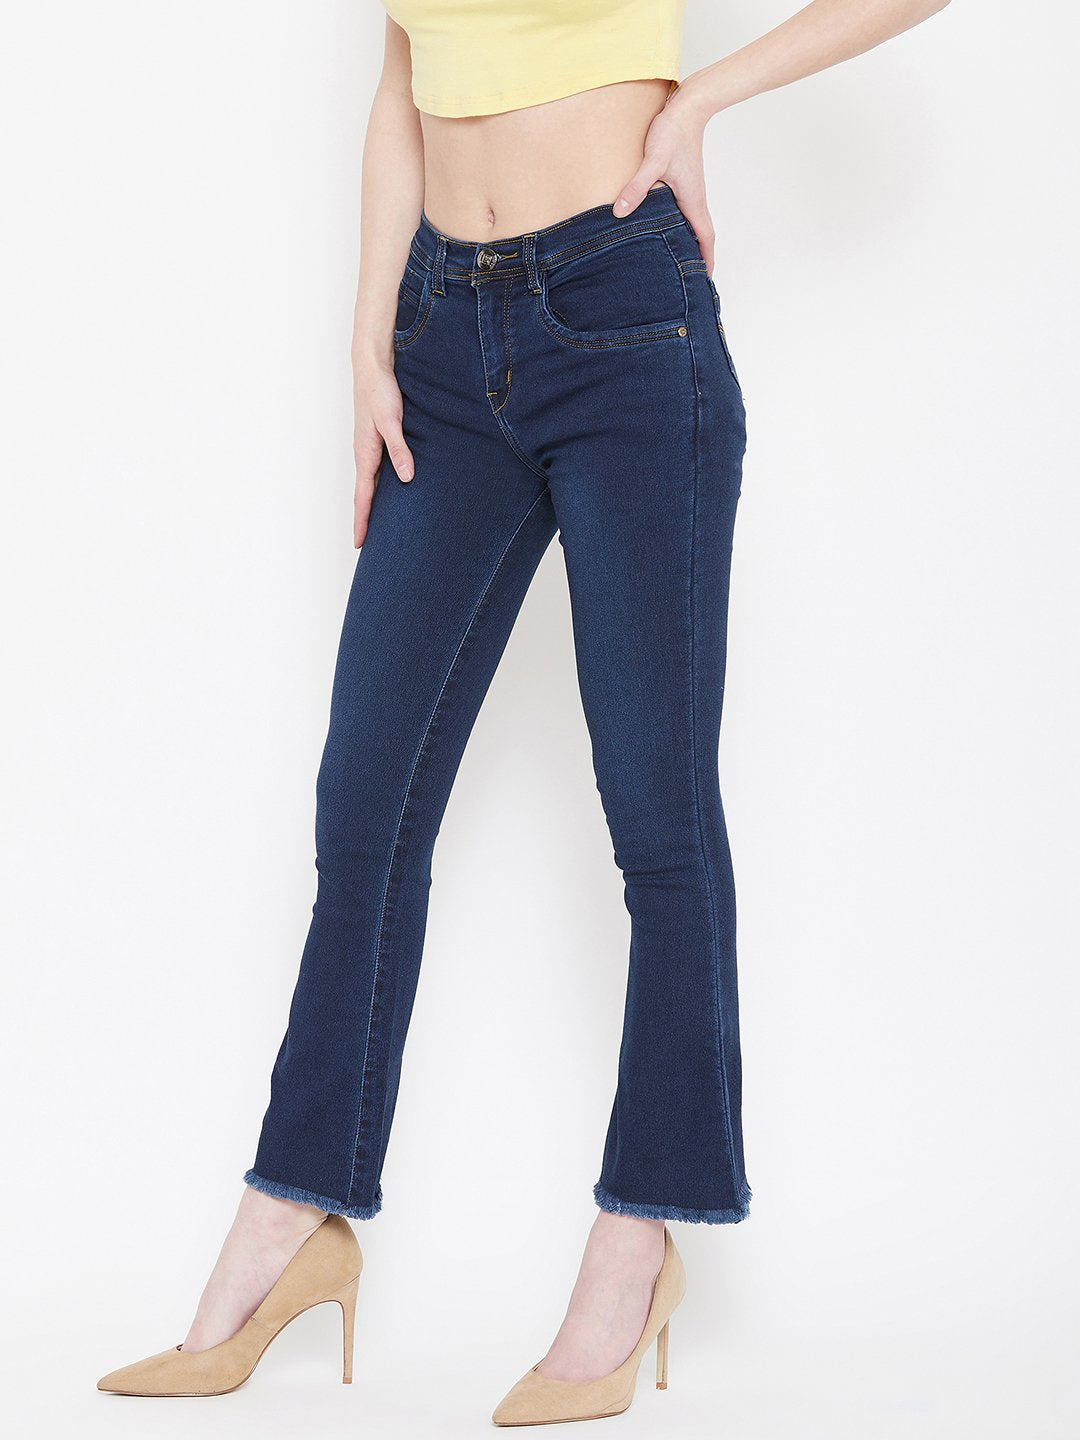 High Waist Boot Cut Basic Blue Jeans - NiftyJeans